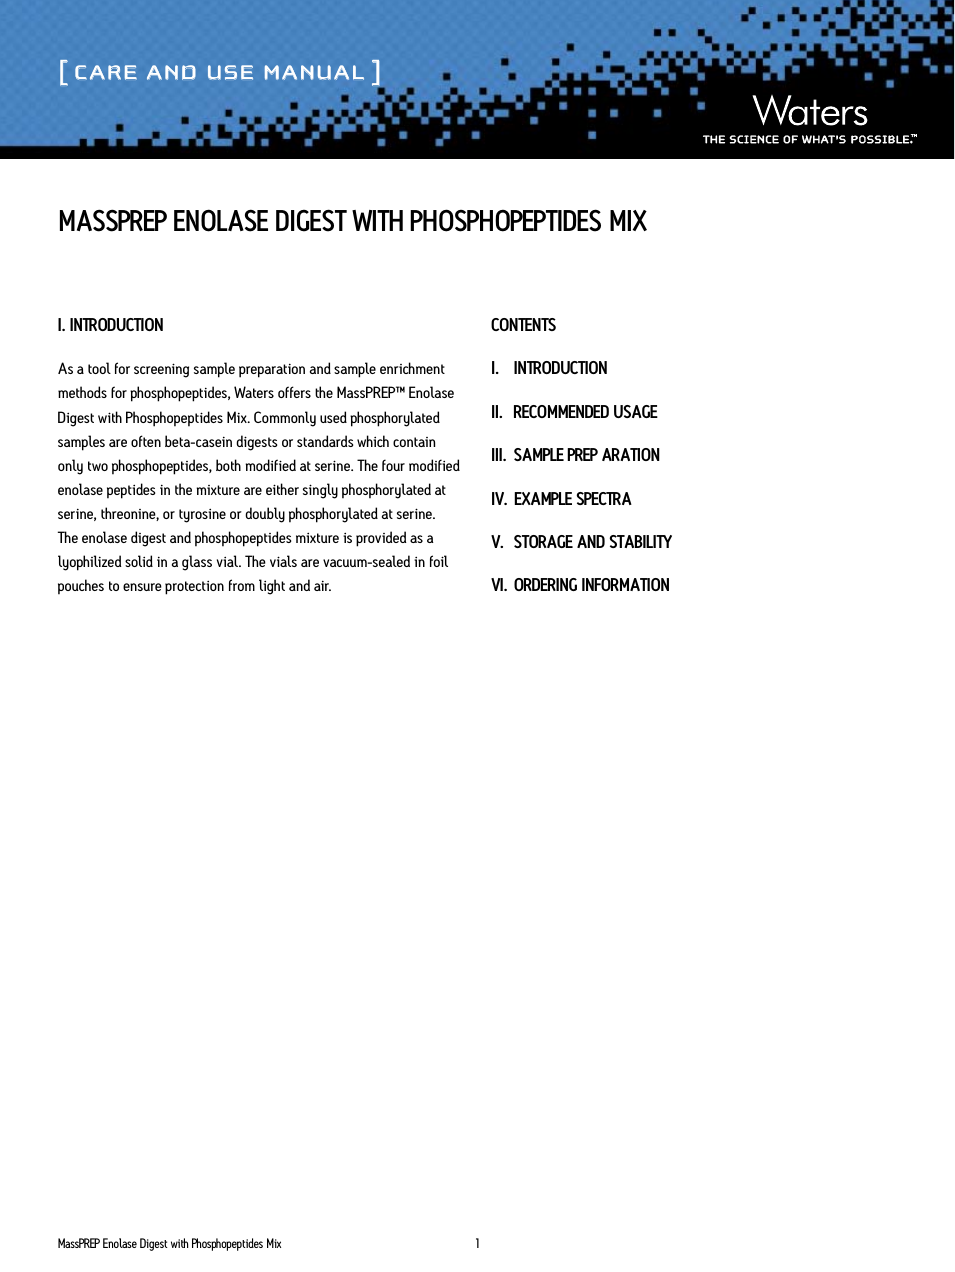 MassPREP Enolase Digest with Phosphopeptides Mix